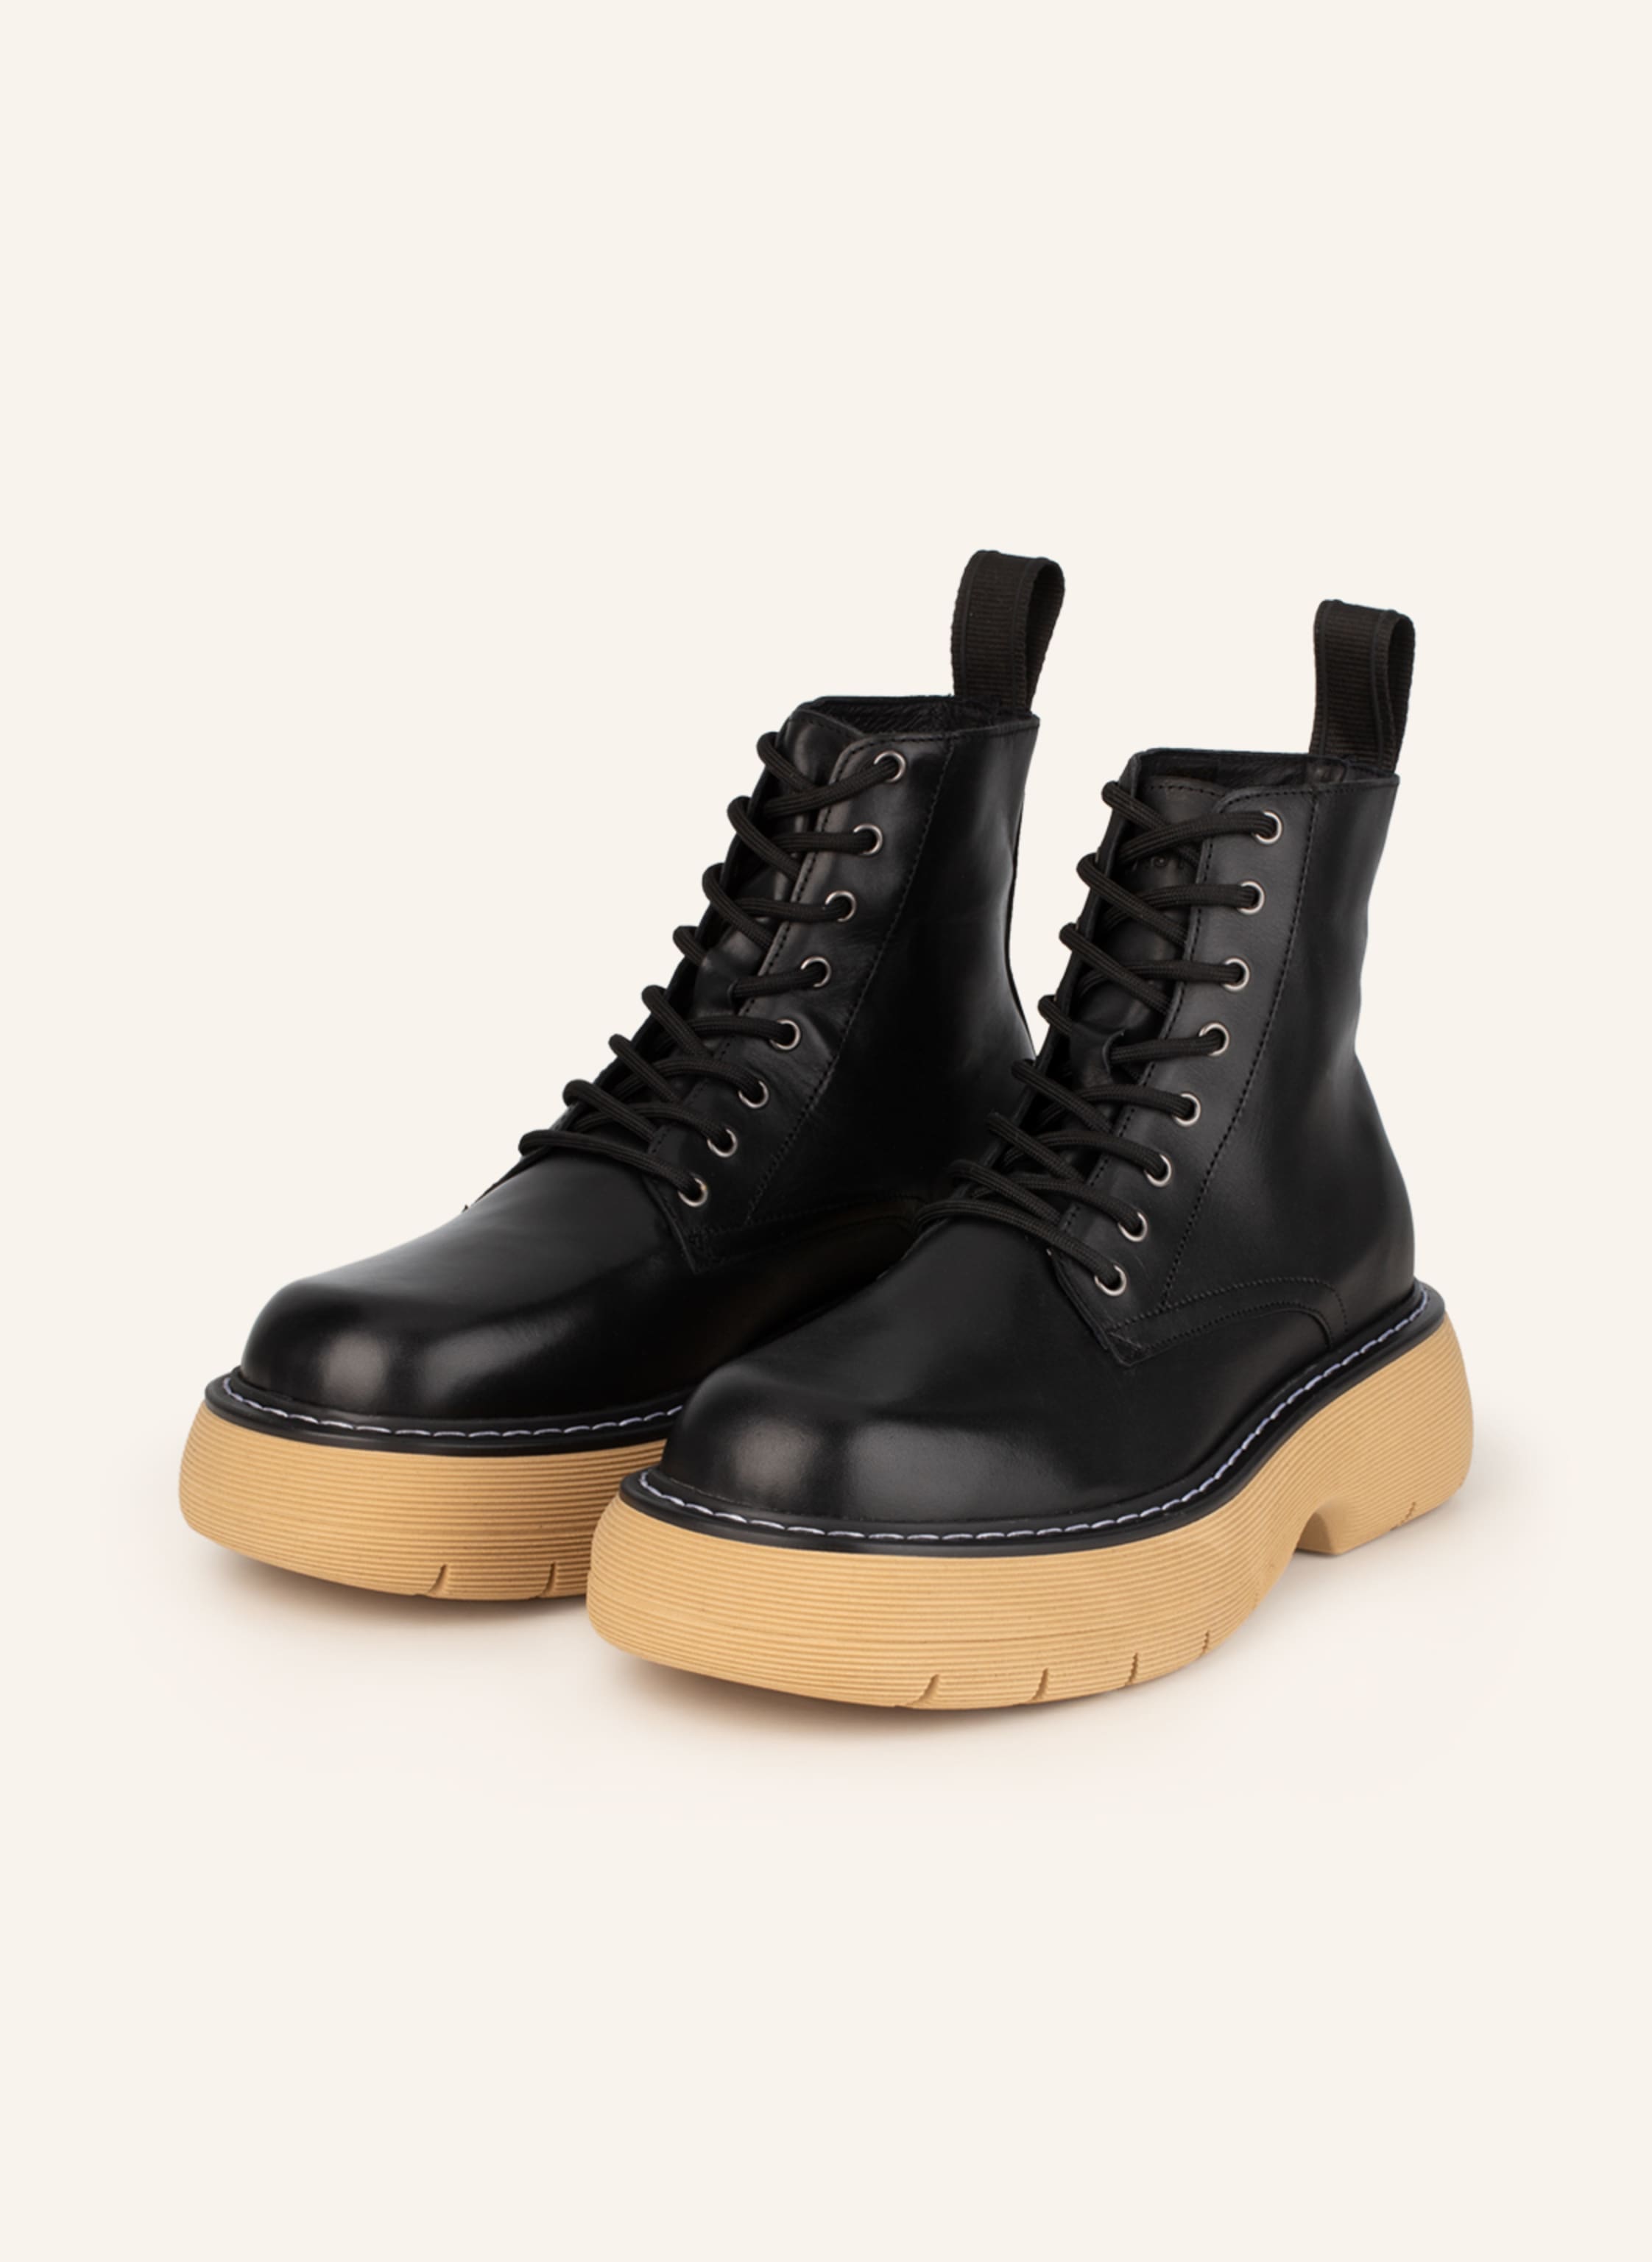 Jane Black Leather Combat Boots Boots